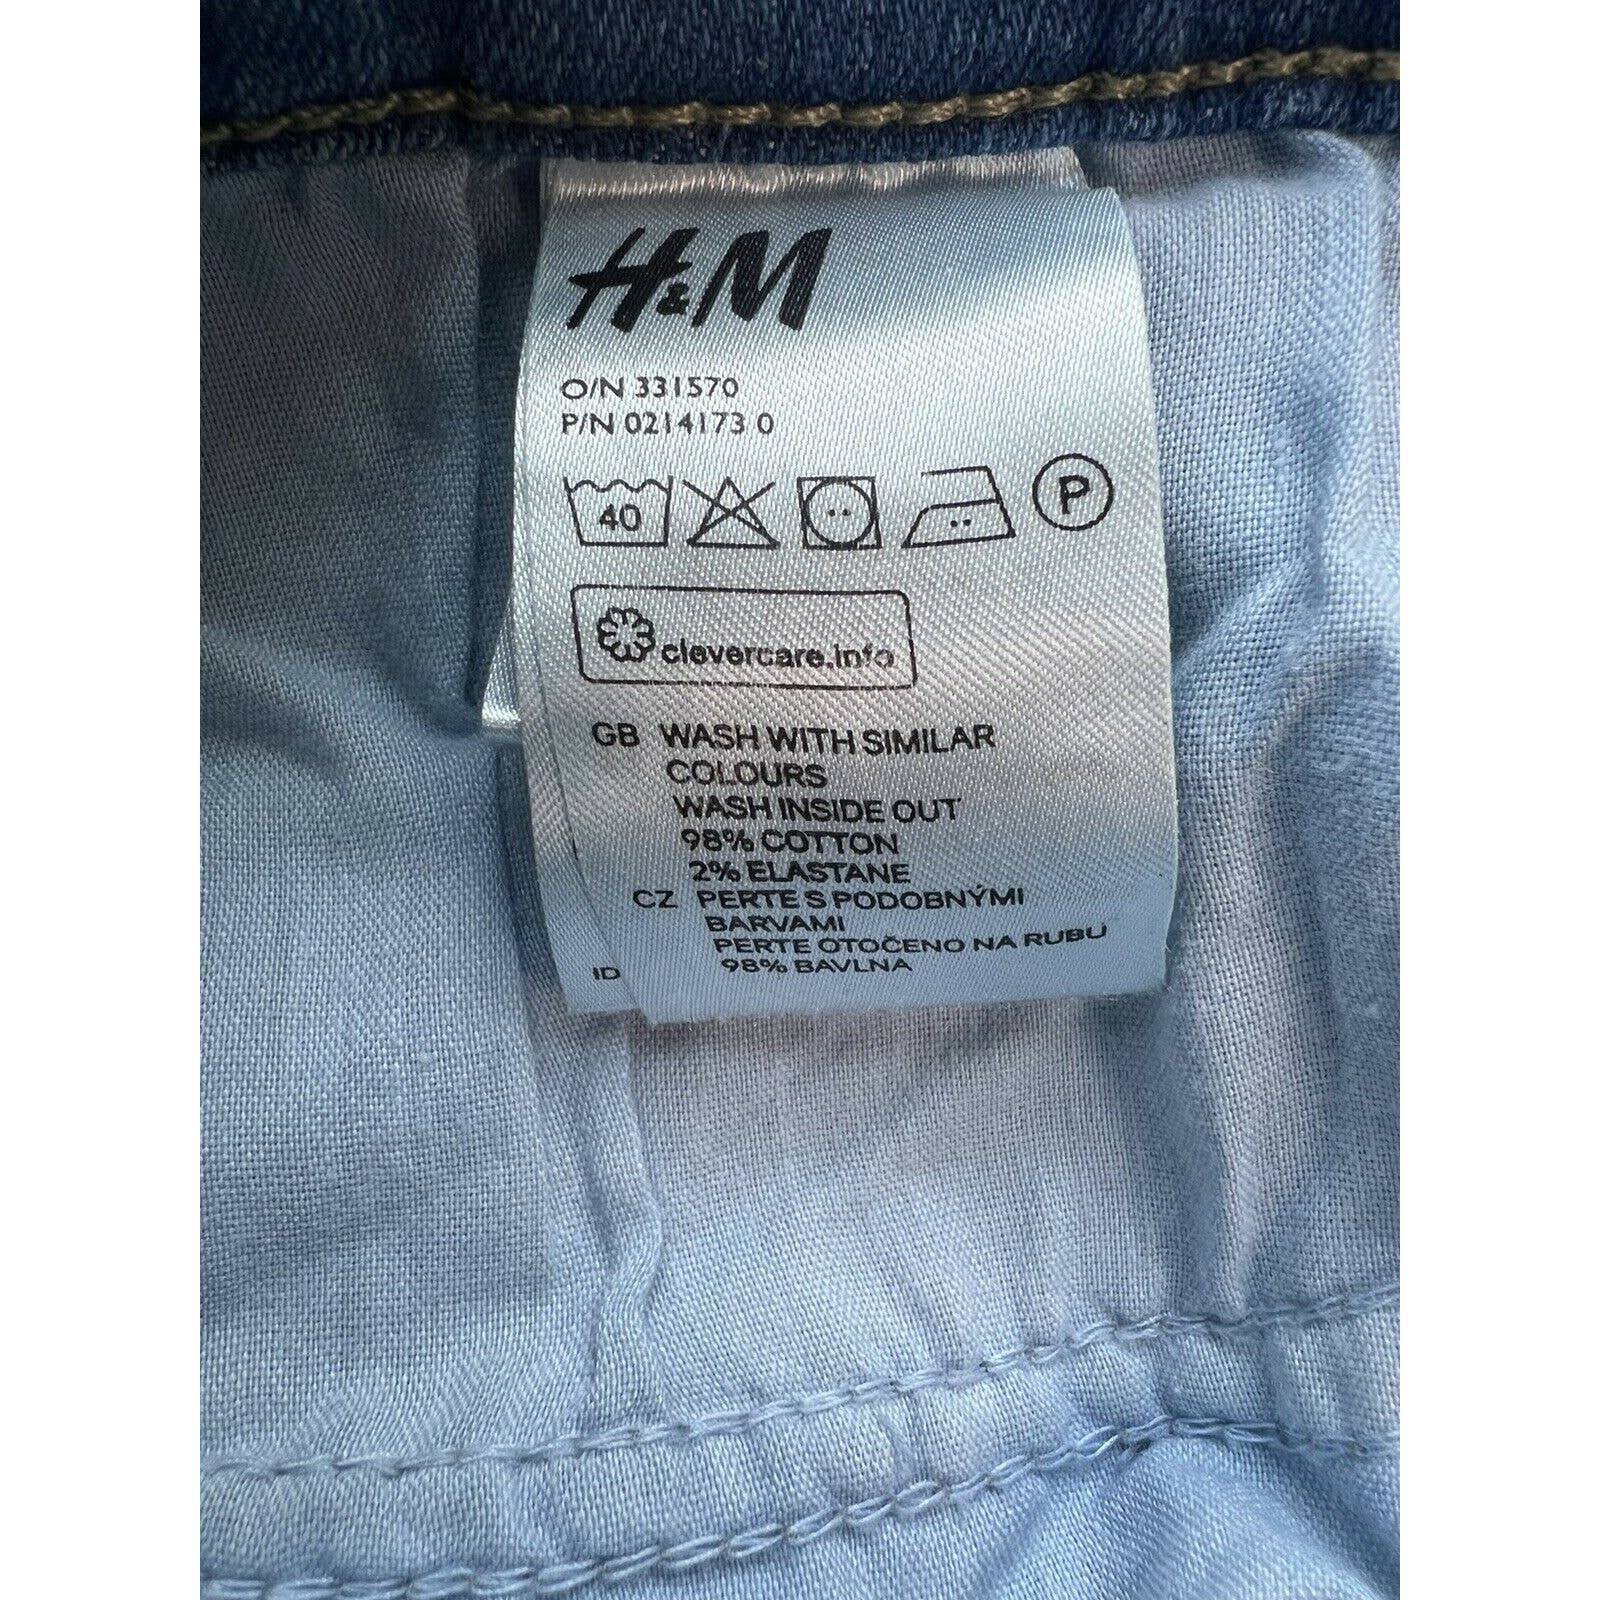 H&M Women’s Size 4 Medium Wash Denim Cut Off Jean Shorts